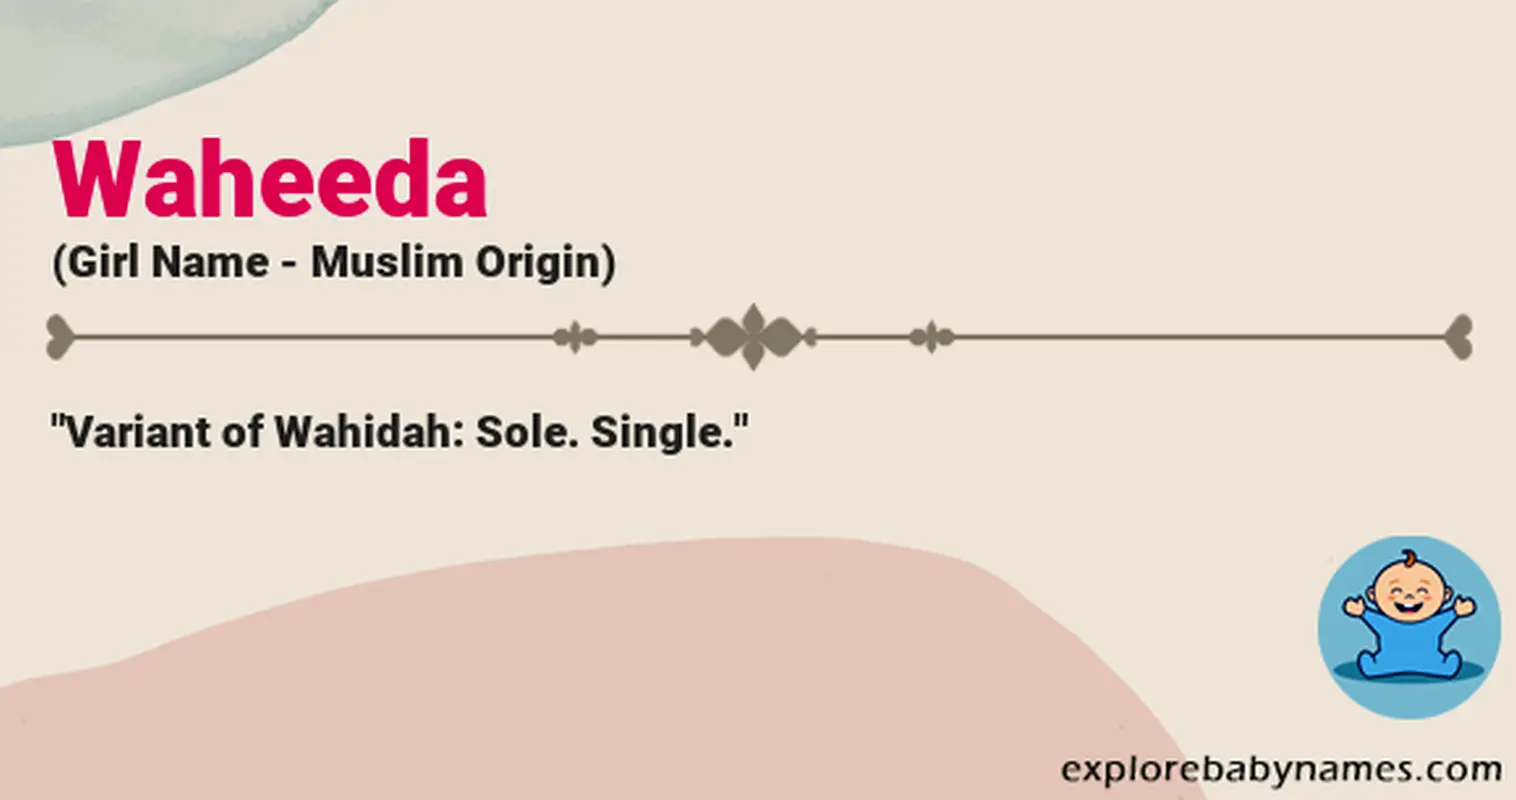 Meaning of Waheeda